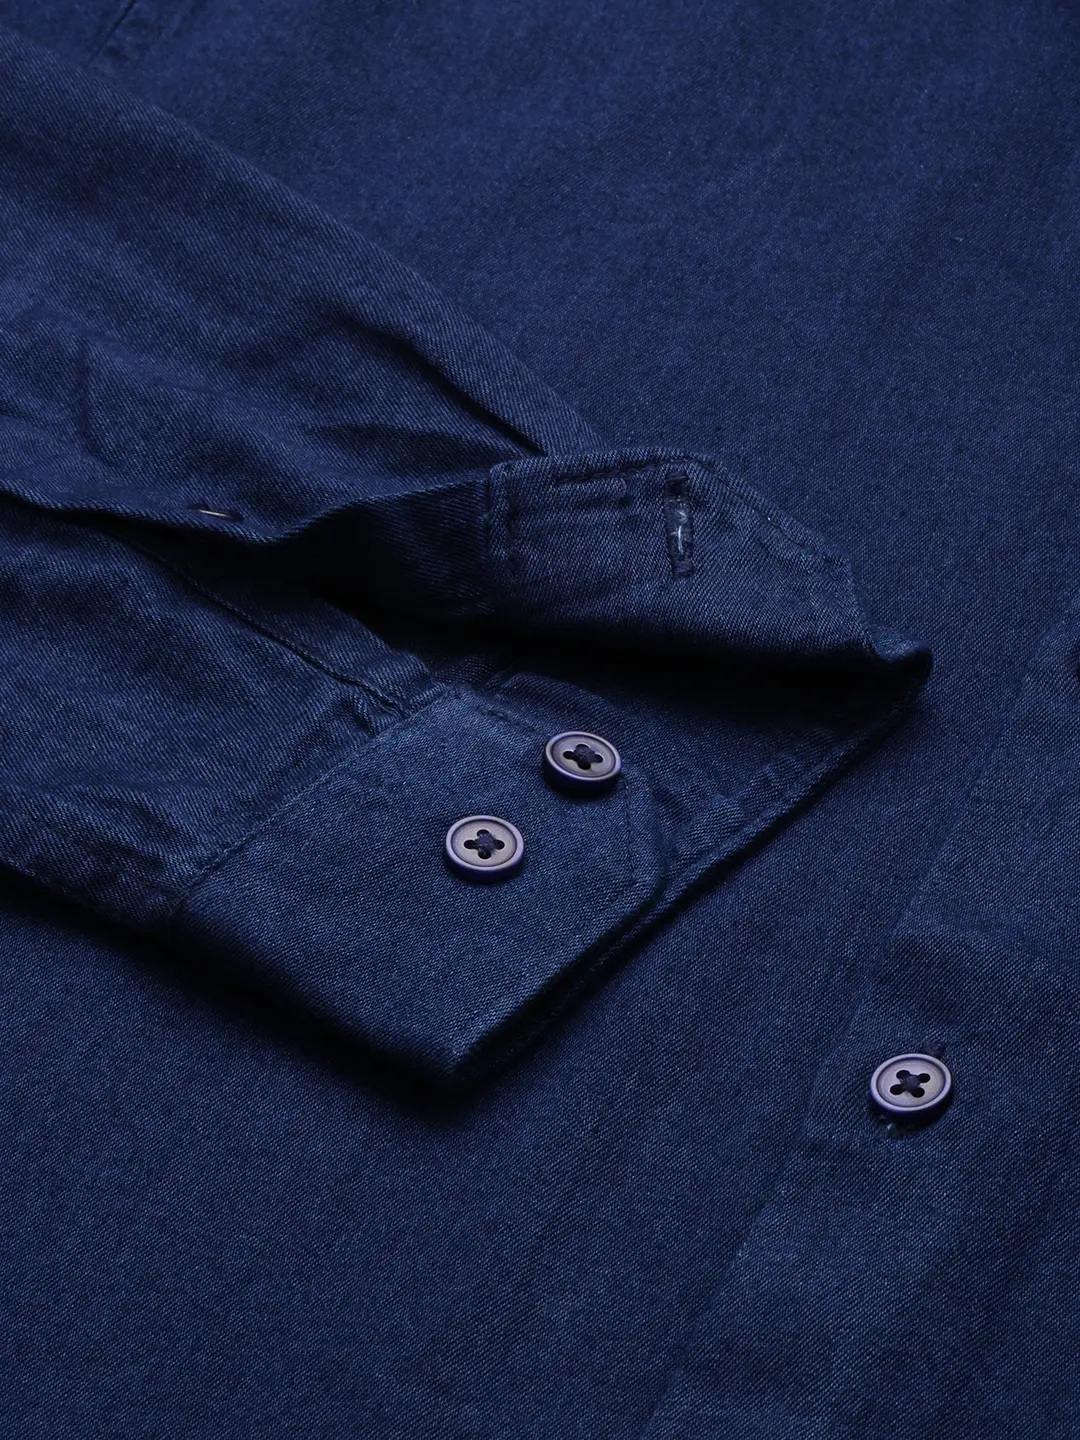 SHOWOFF Men's Spread Collar Navy Blue Solid Shirt